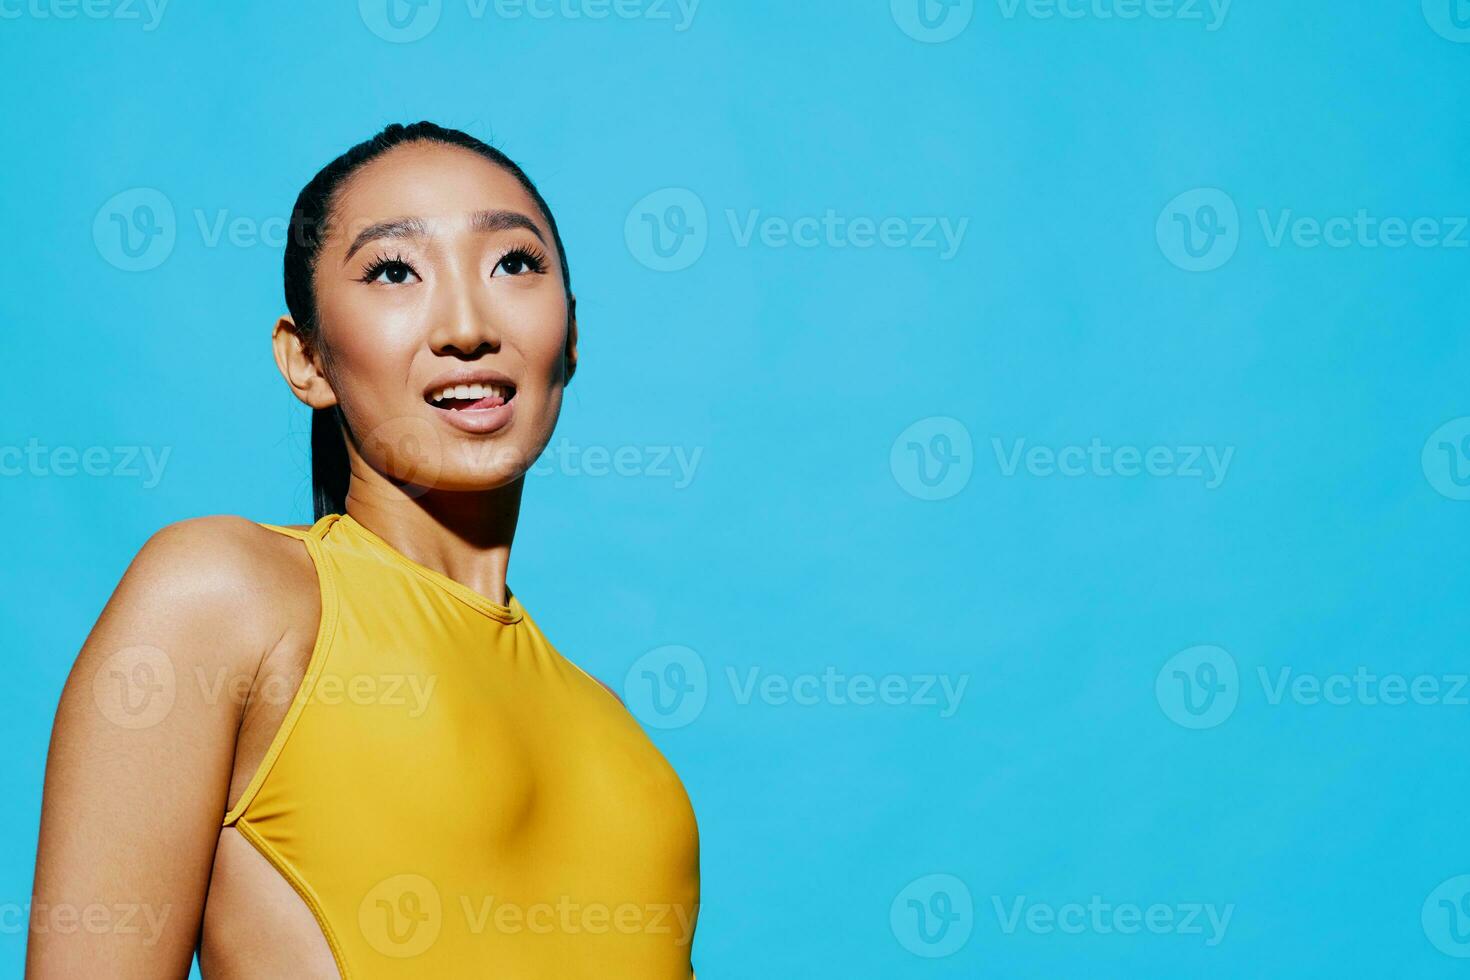 vrouw modieus verrast achtergrond blauw persoon glimlach levensstijl schoonheid portret mode geel foto